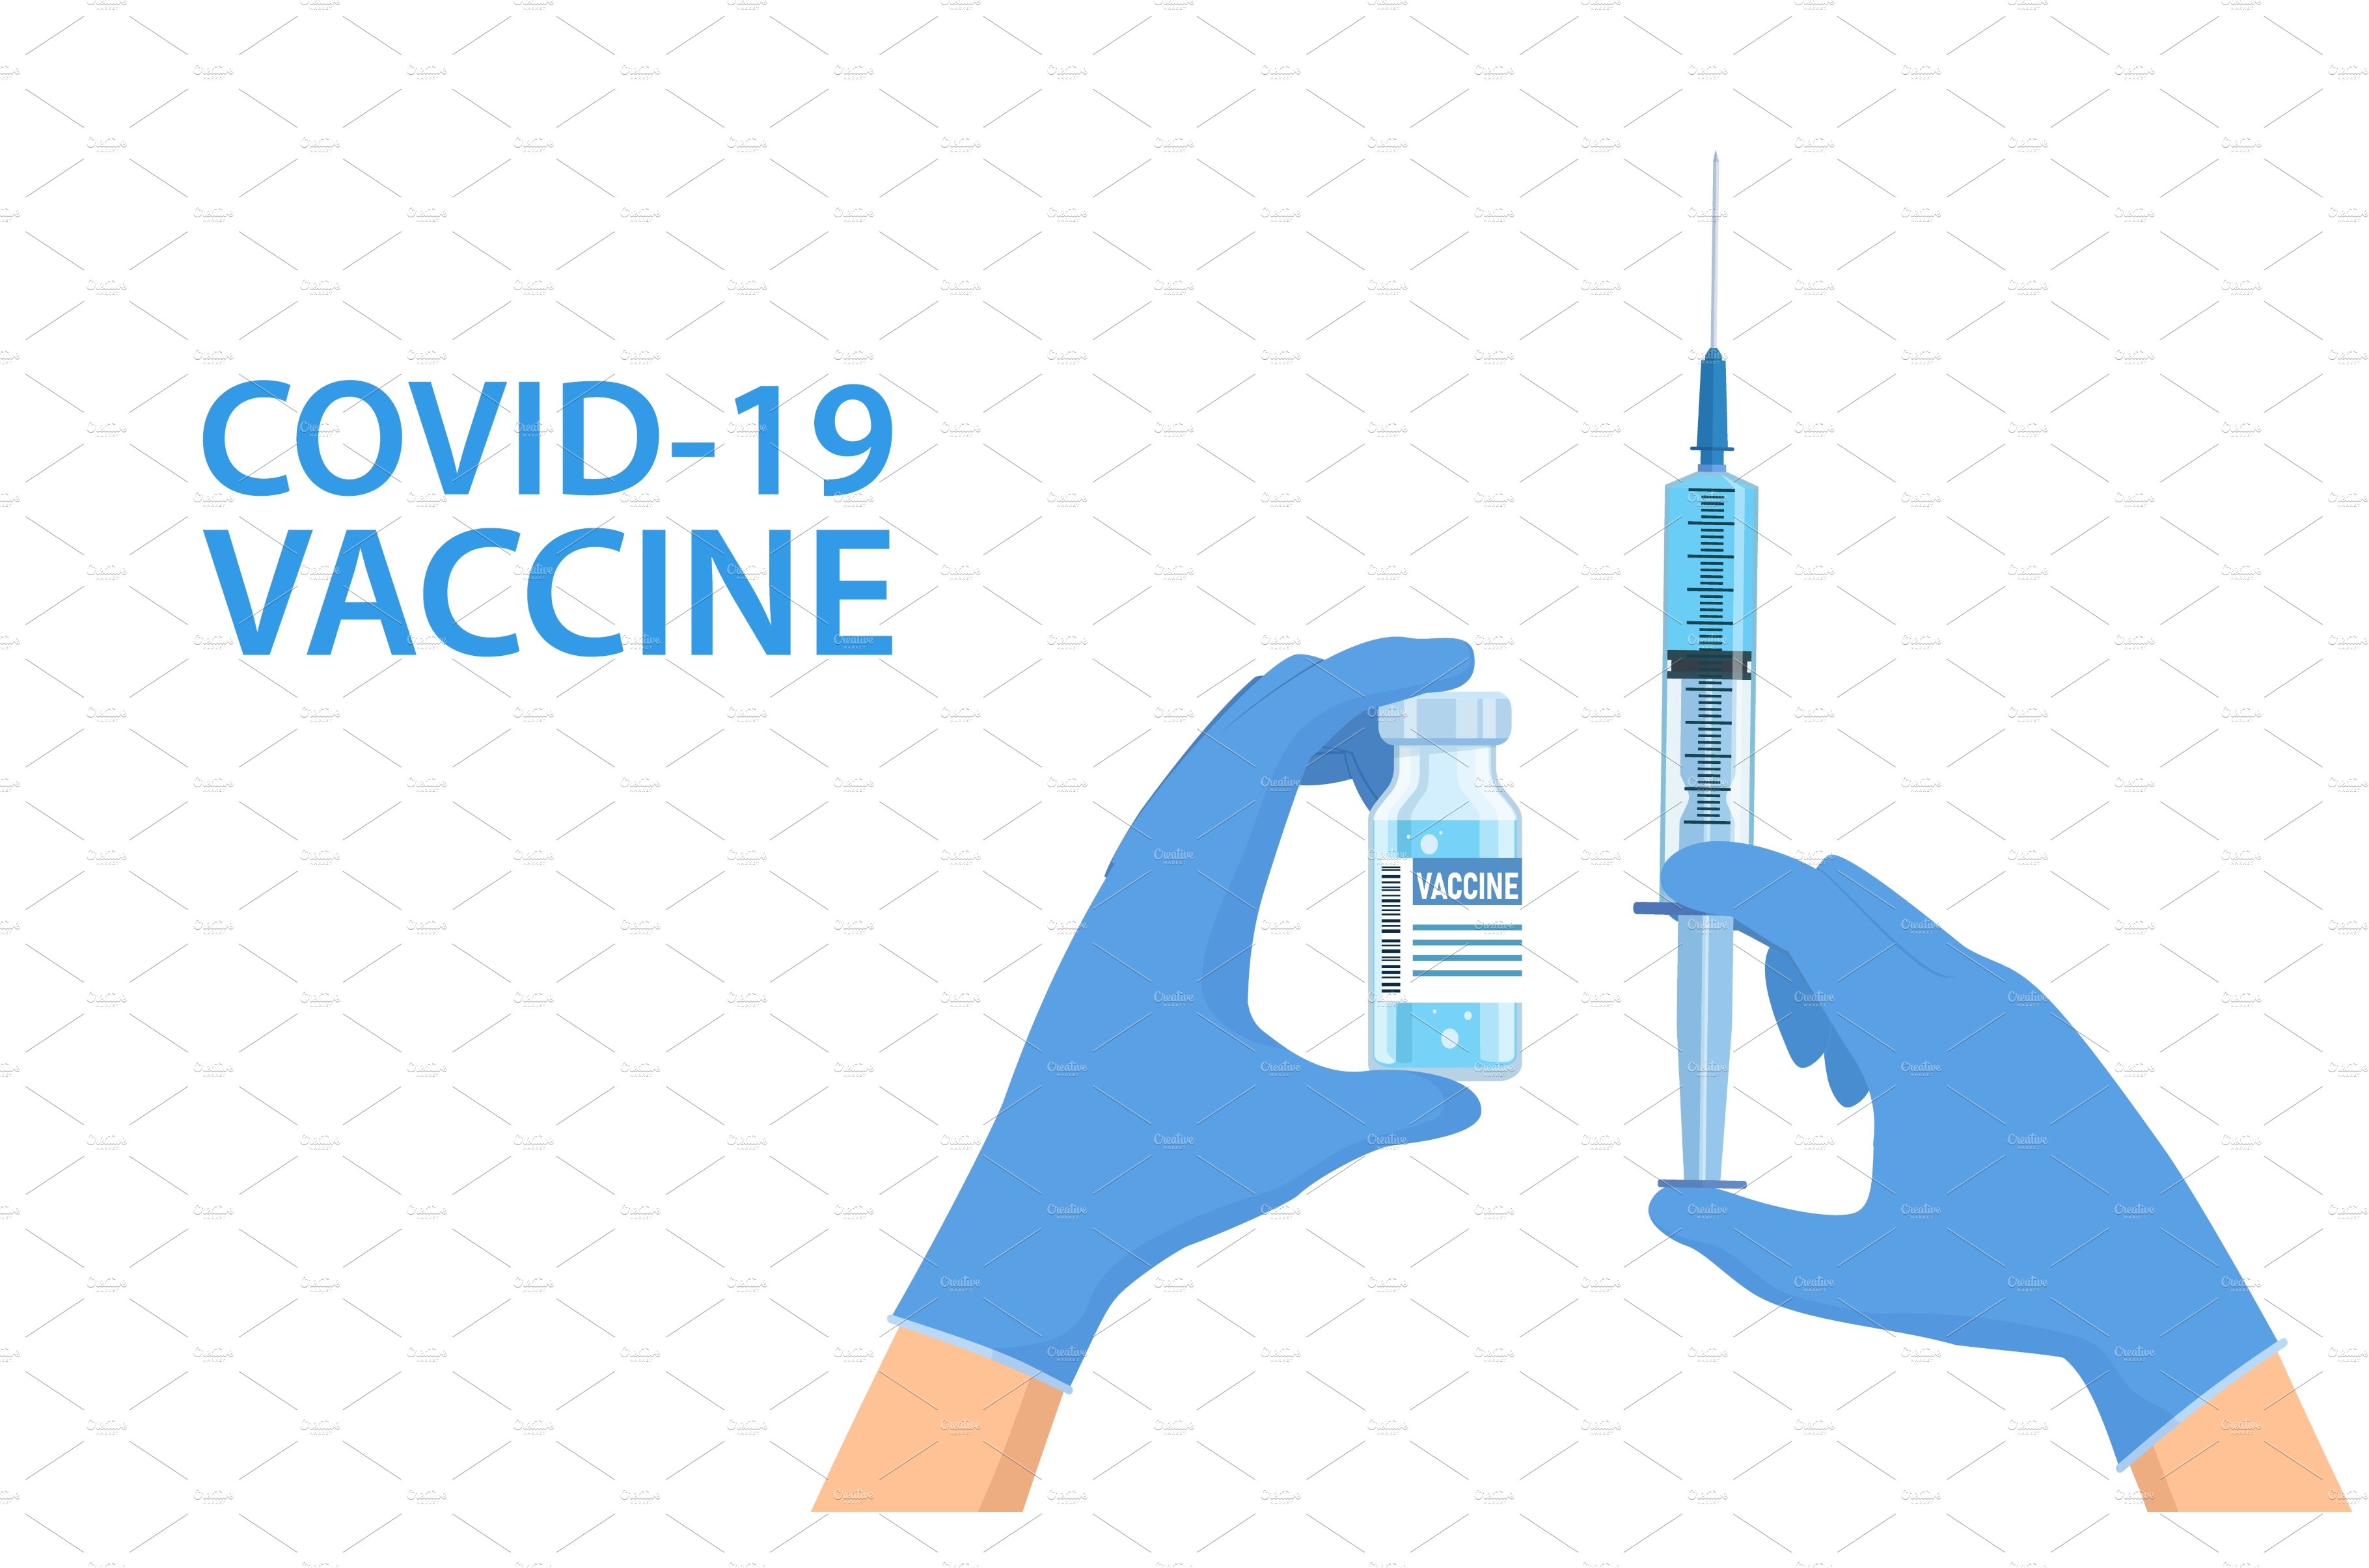 Coronavirus vaccine COVID-19 cover image.